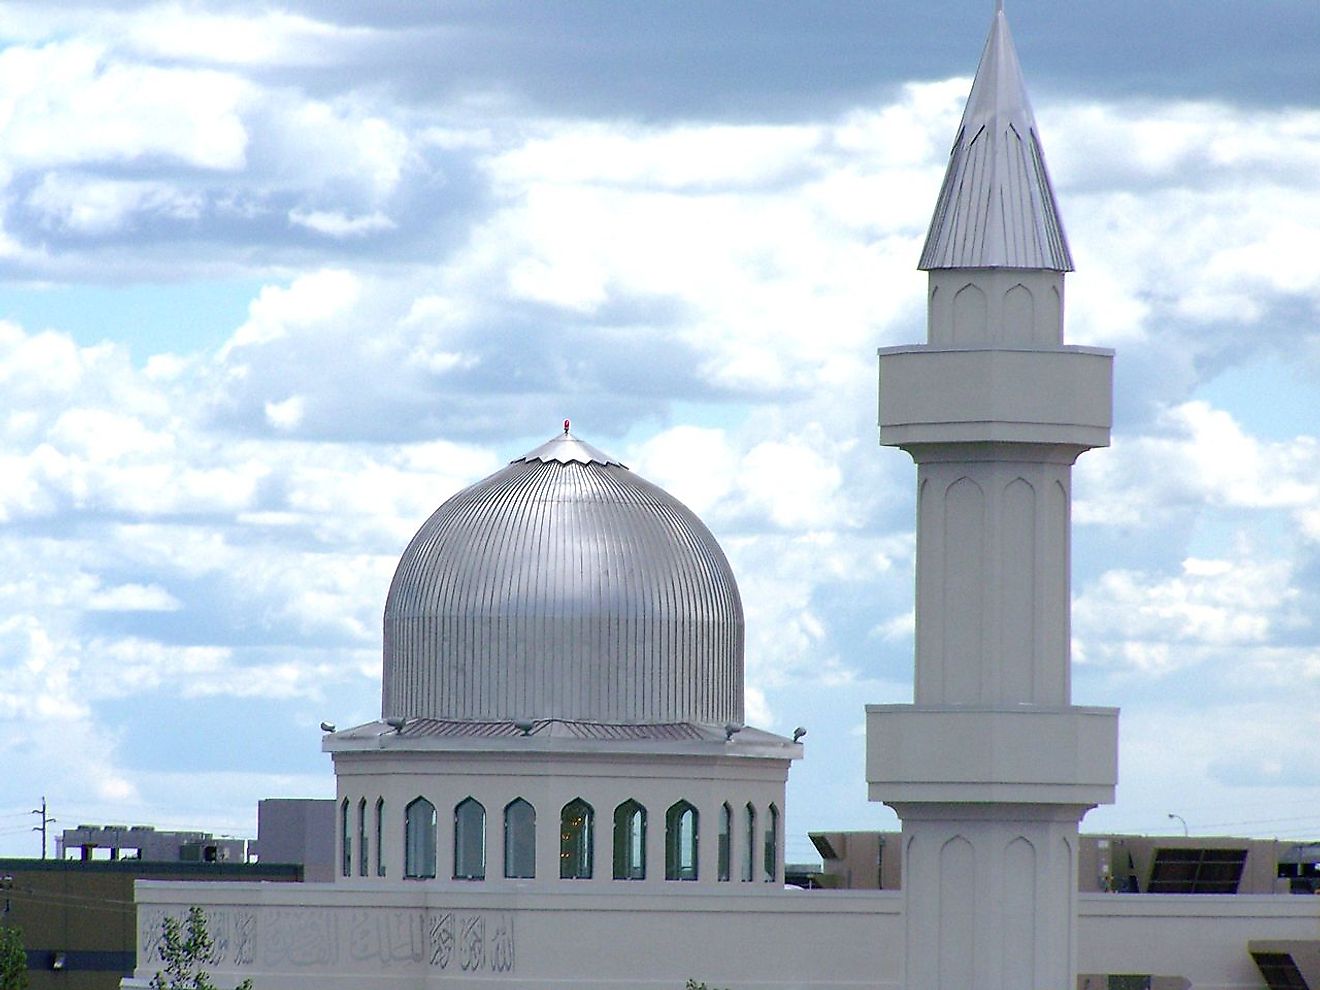 The Baitunnur mosque of the Ahmadiyya Muslim Community located at 4353 54 Avenue NE, Calgary, Alberta, Canada. Image credit: Robert Thivierge/Wikimedia.org